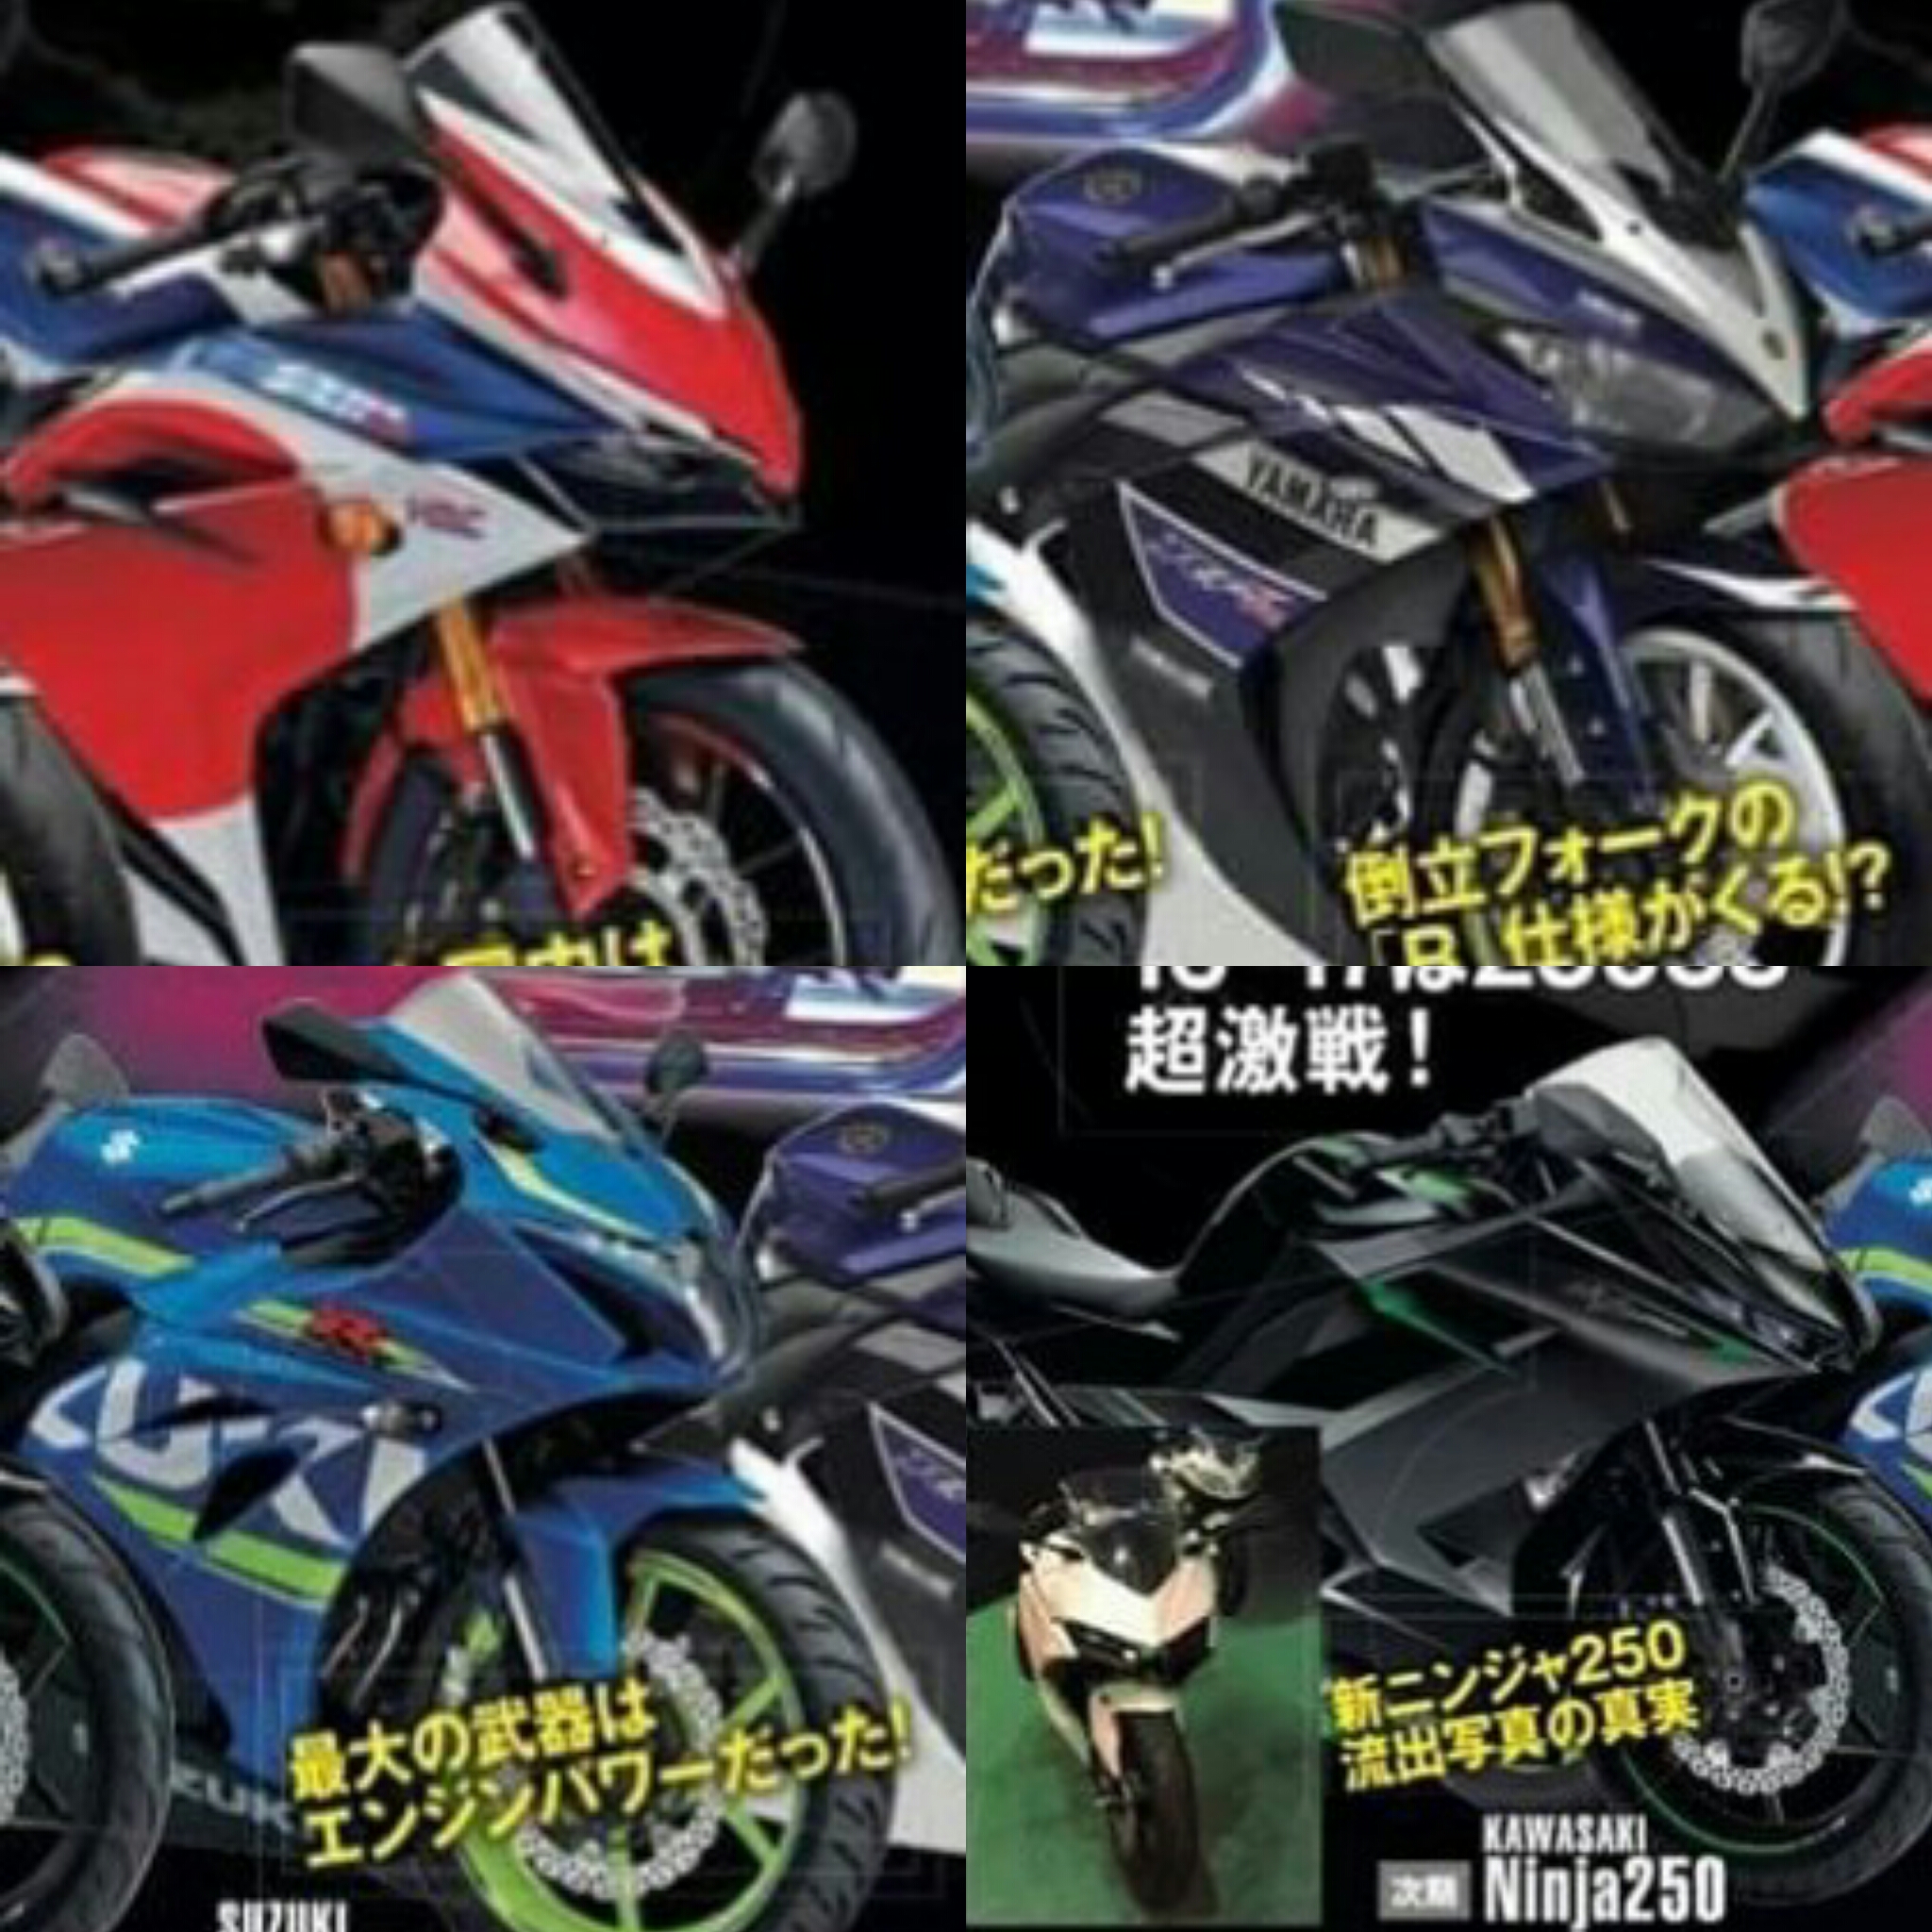 Gambar Sepeda Motor Yamaha 250 Cc Terkeren Gentong Modifikasi